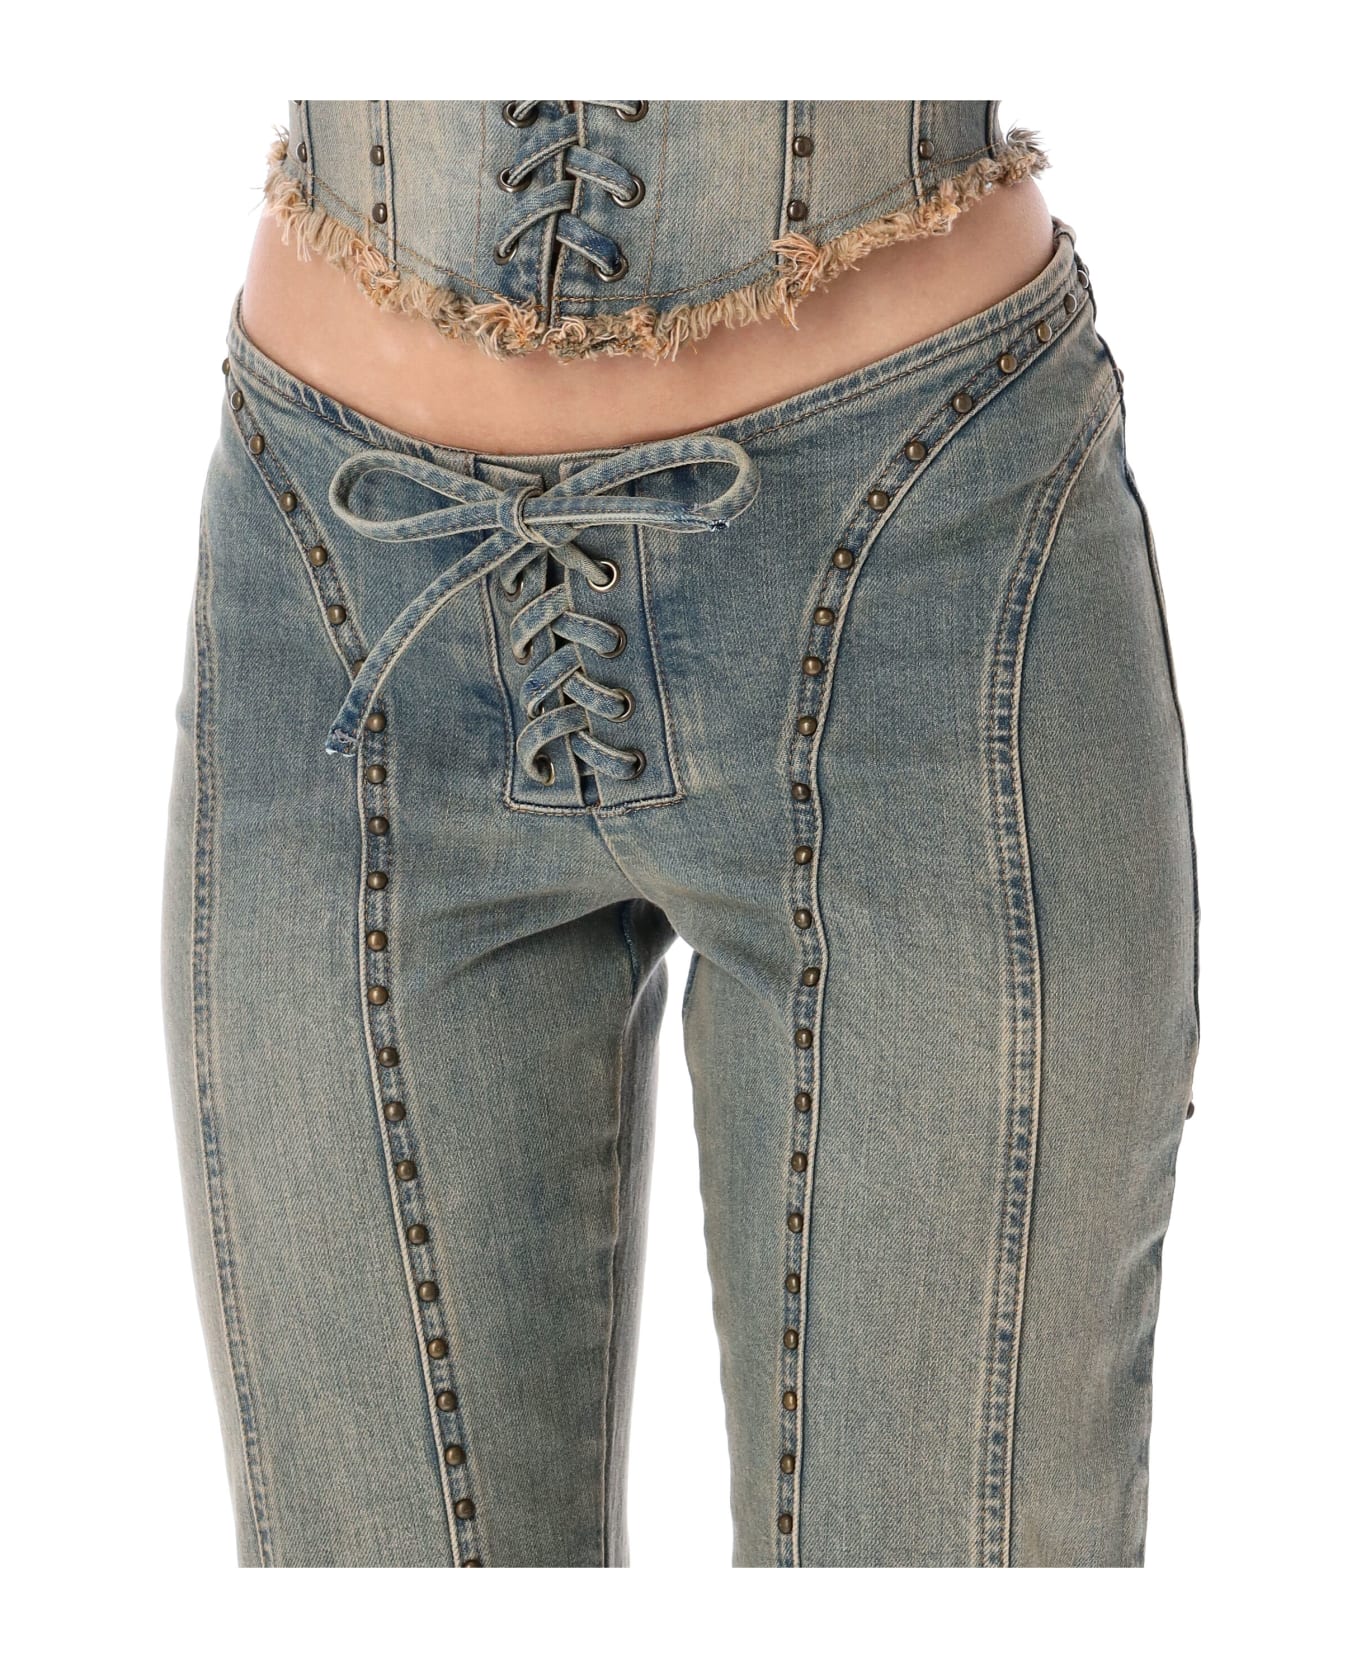 MISBHV Lara Laced Studded Jeans - BLUE SAND デニム